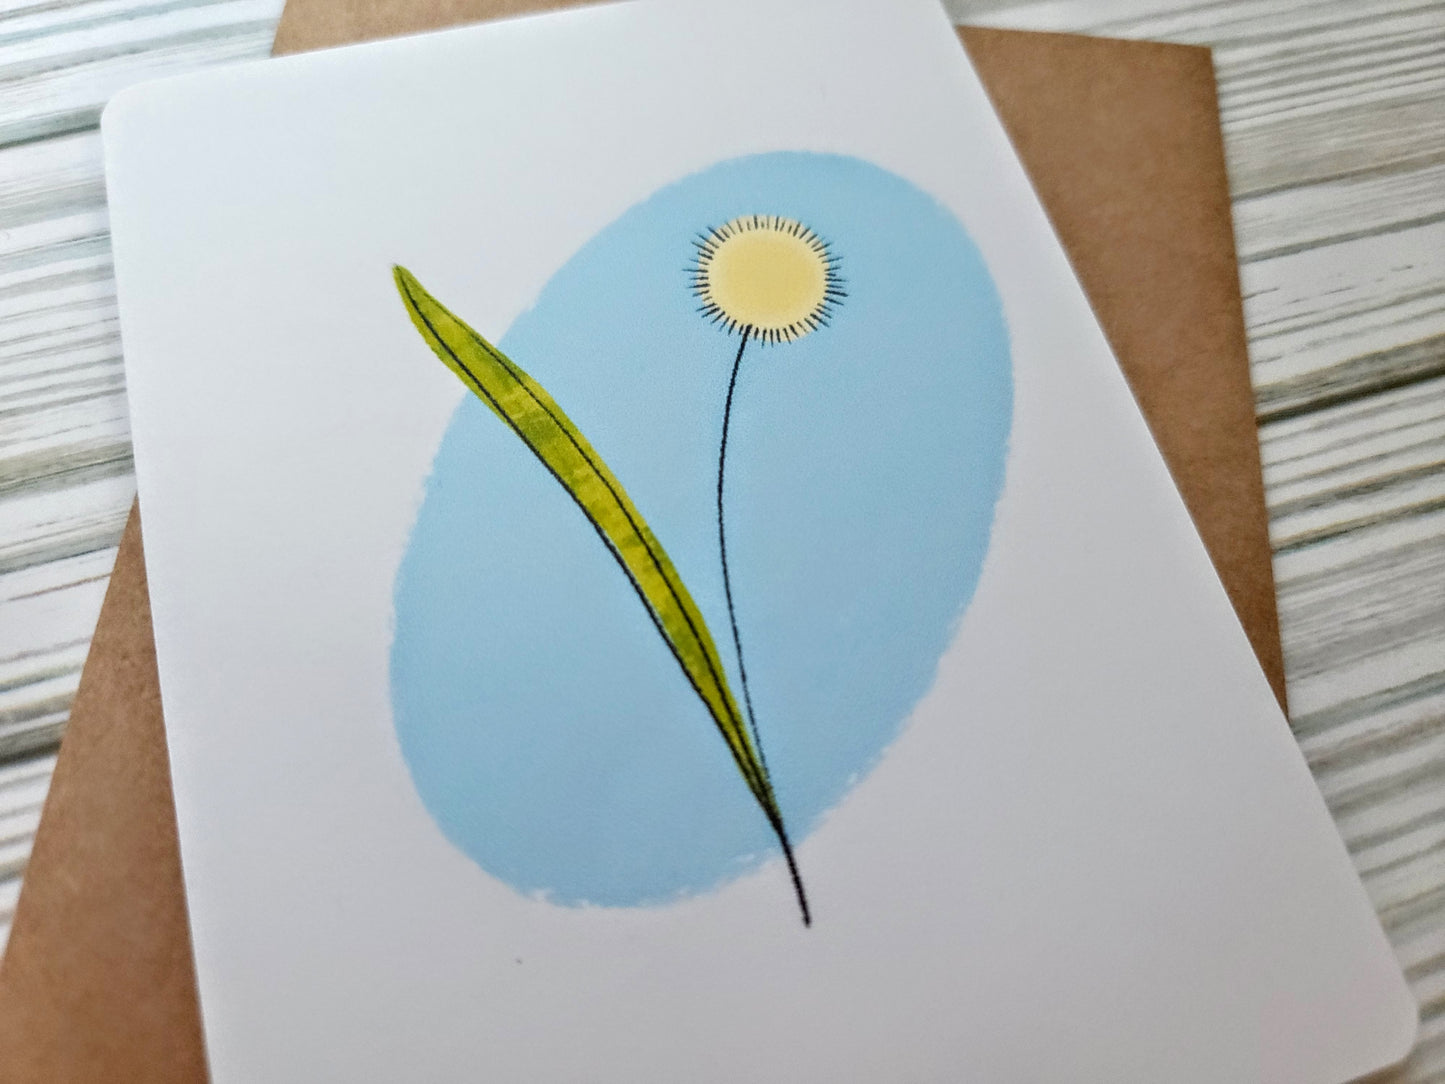 Dandelion Handmade Greeting Card - Recycled Paper and Kraft Envelope - Angled Overhead Shot